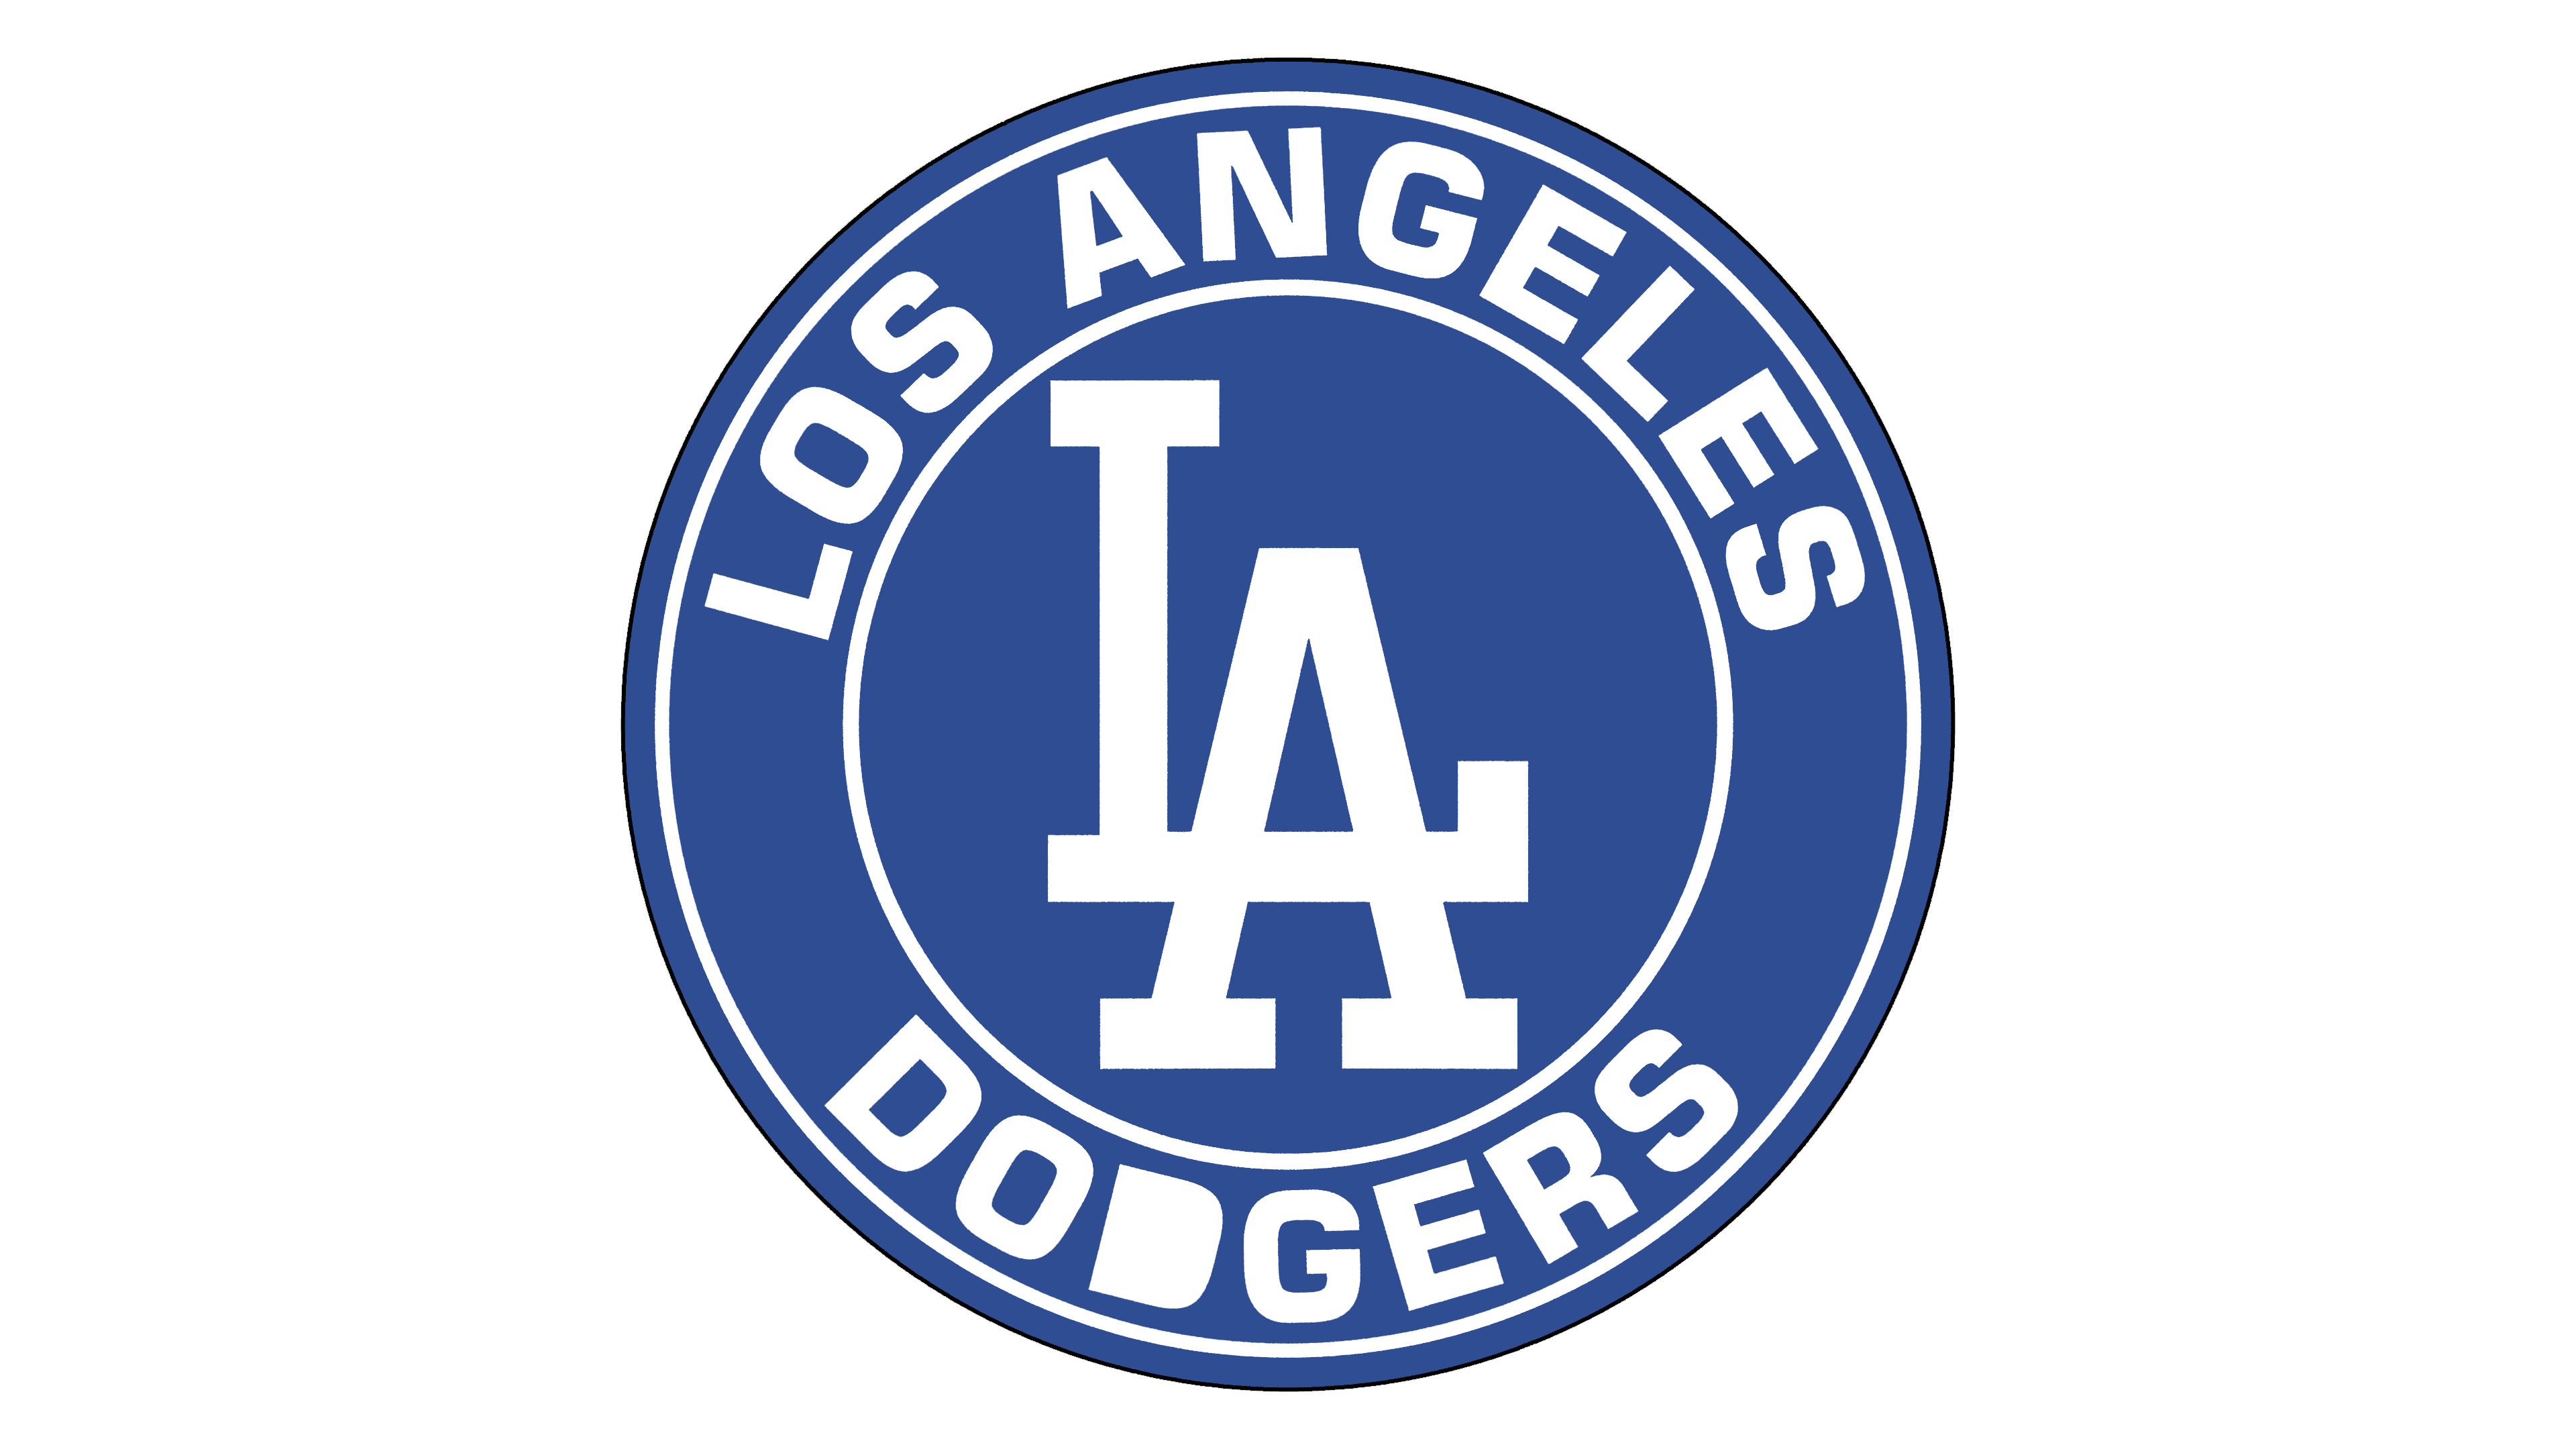 Los Angeles Dodgers Transparent Image